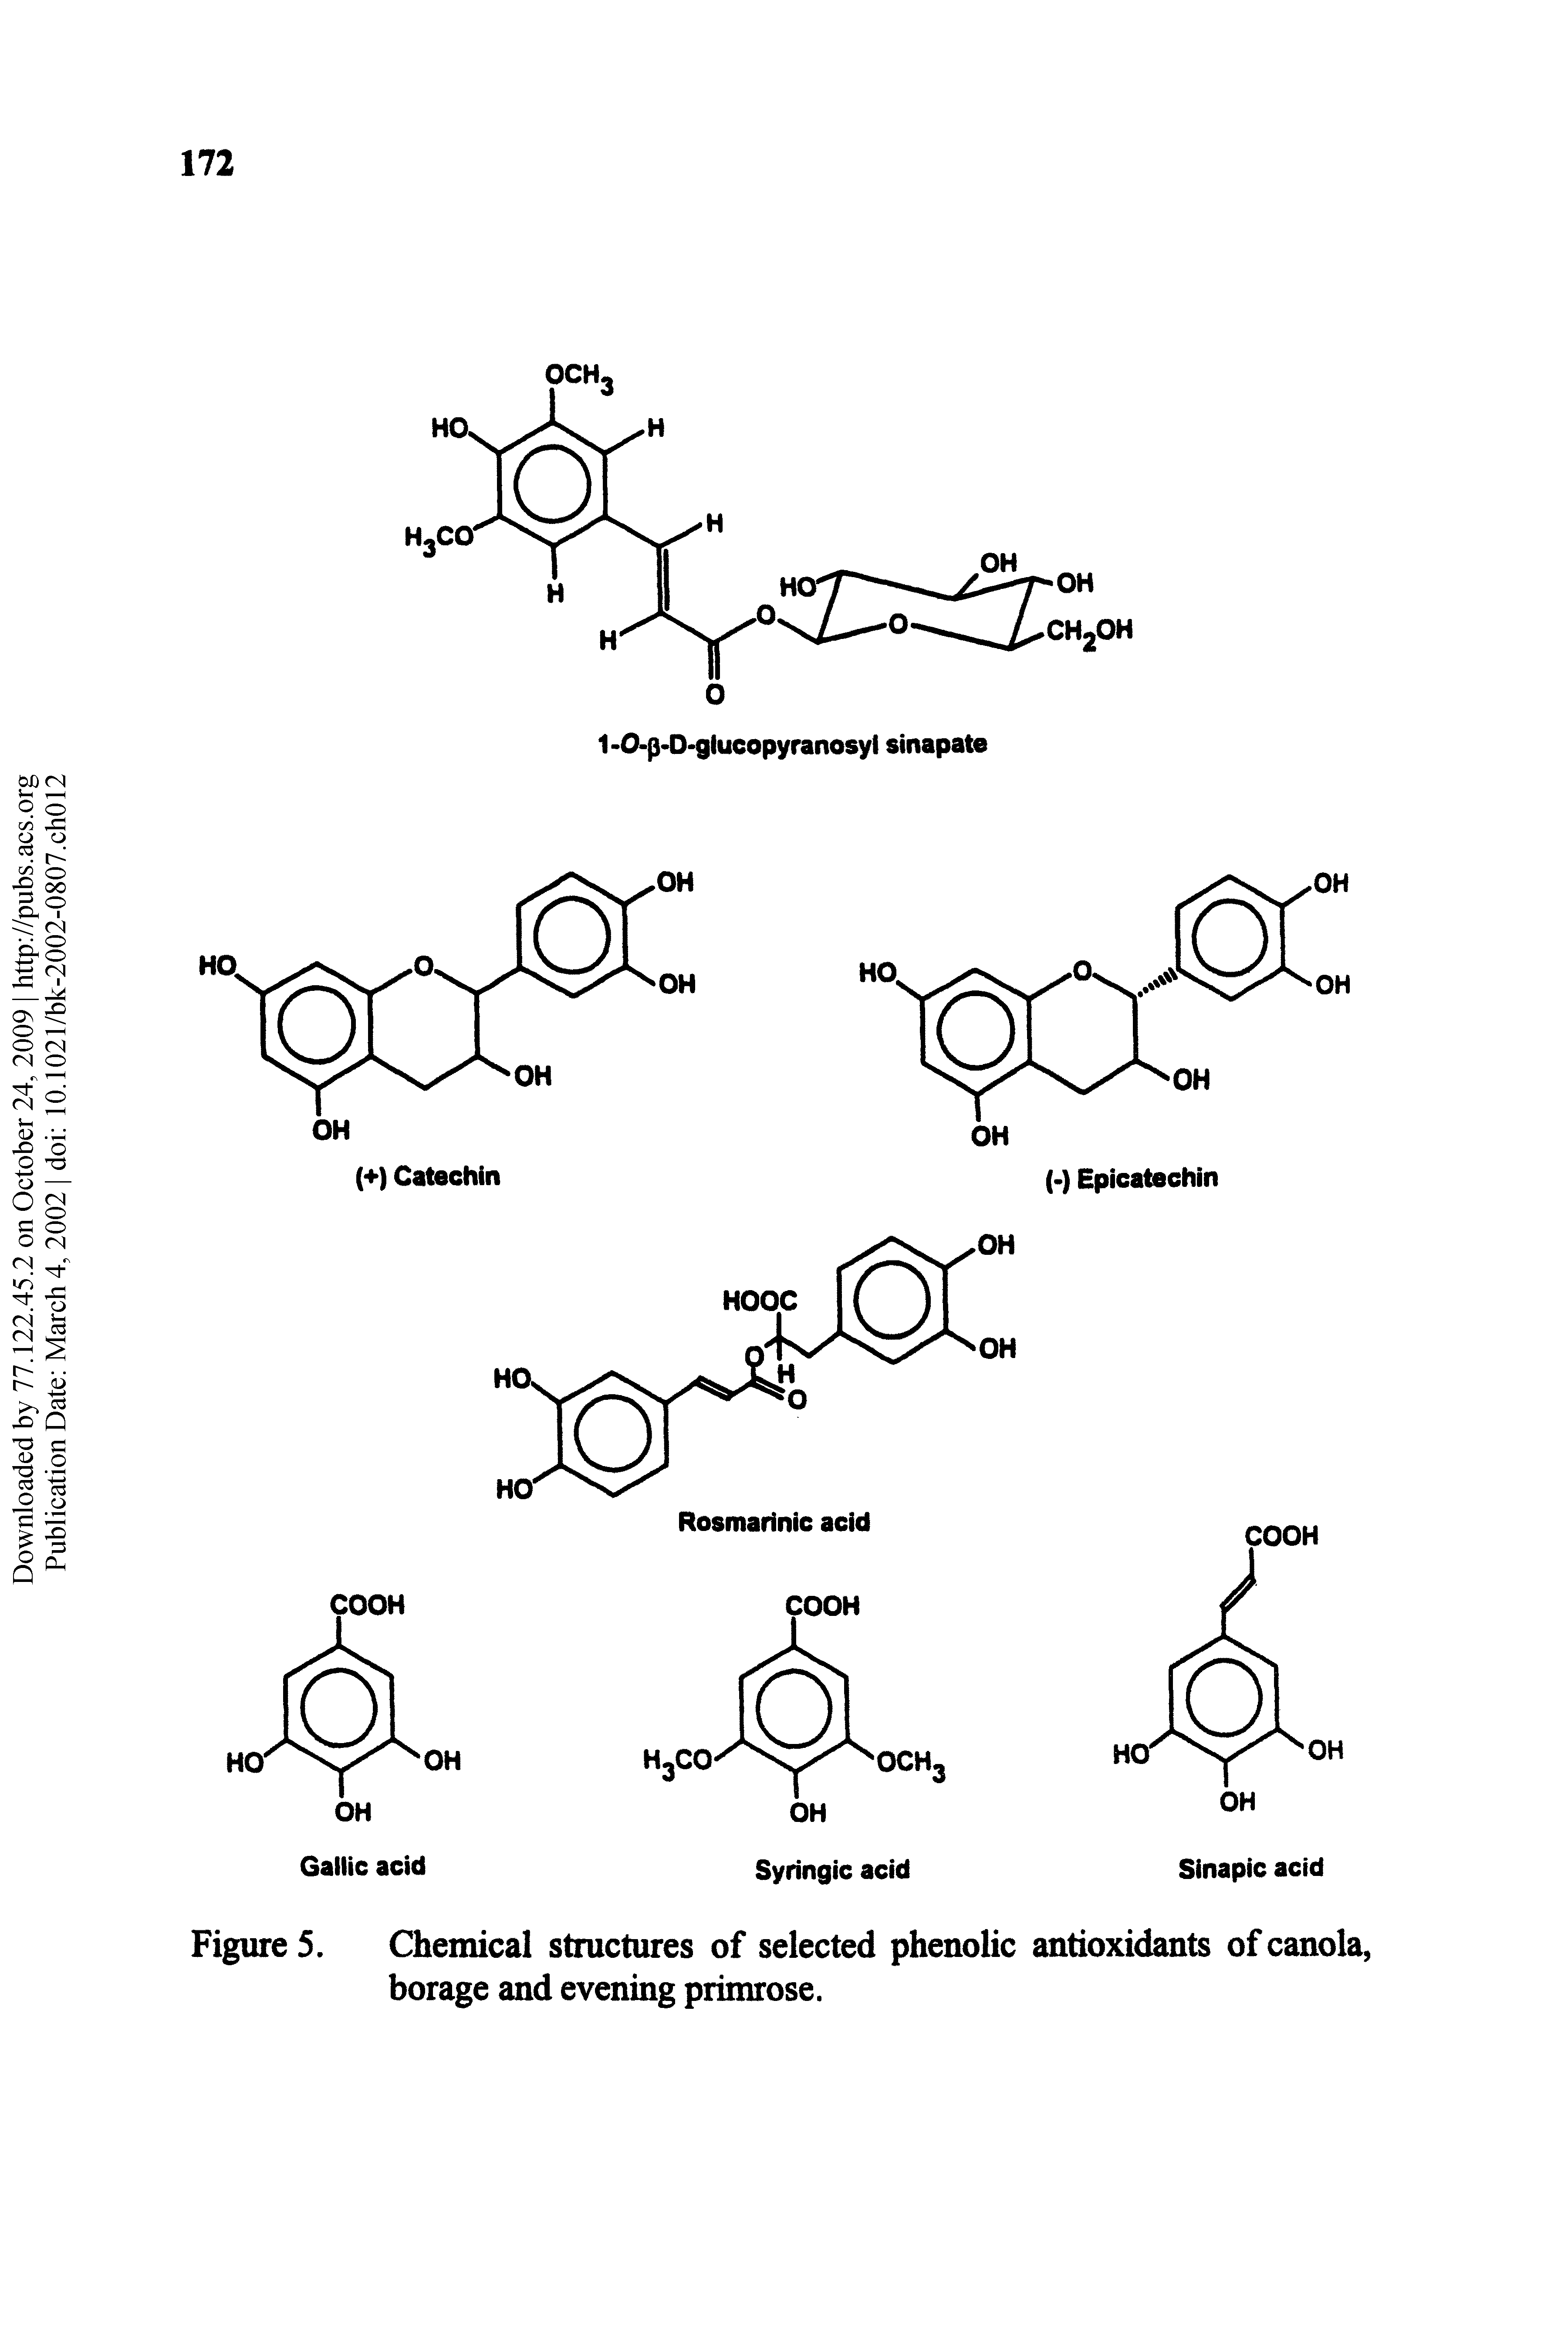 Figure 5. Chemical structures of selected phenolic antioxidants of canola, borage and evening primrose.